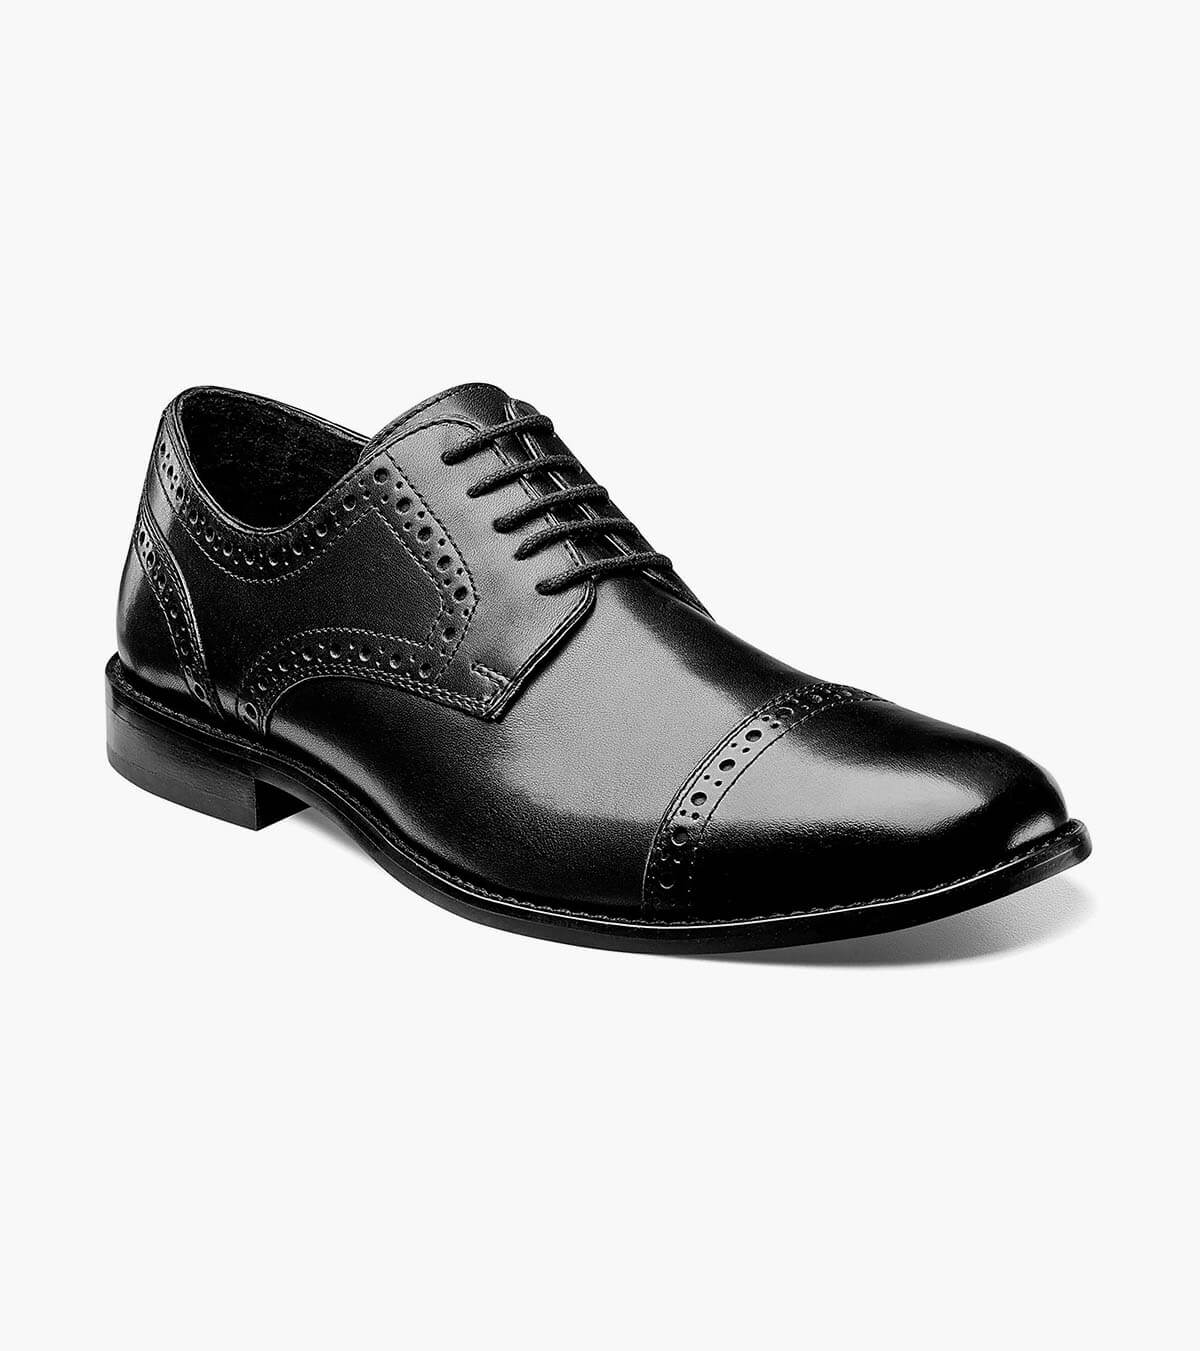 Nunn Bush Norcross Comfort Gel Men's Black Oxford Leather Shoes 84526-001 